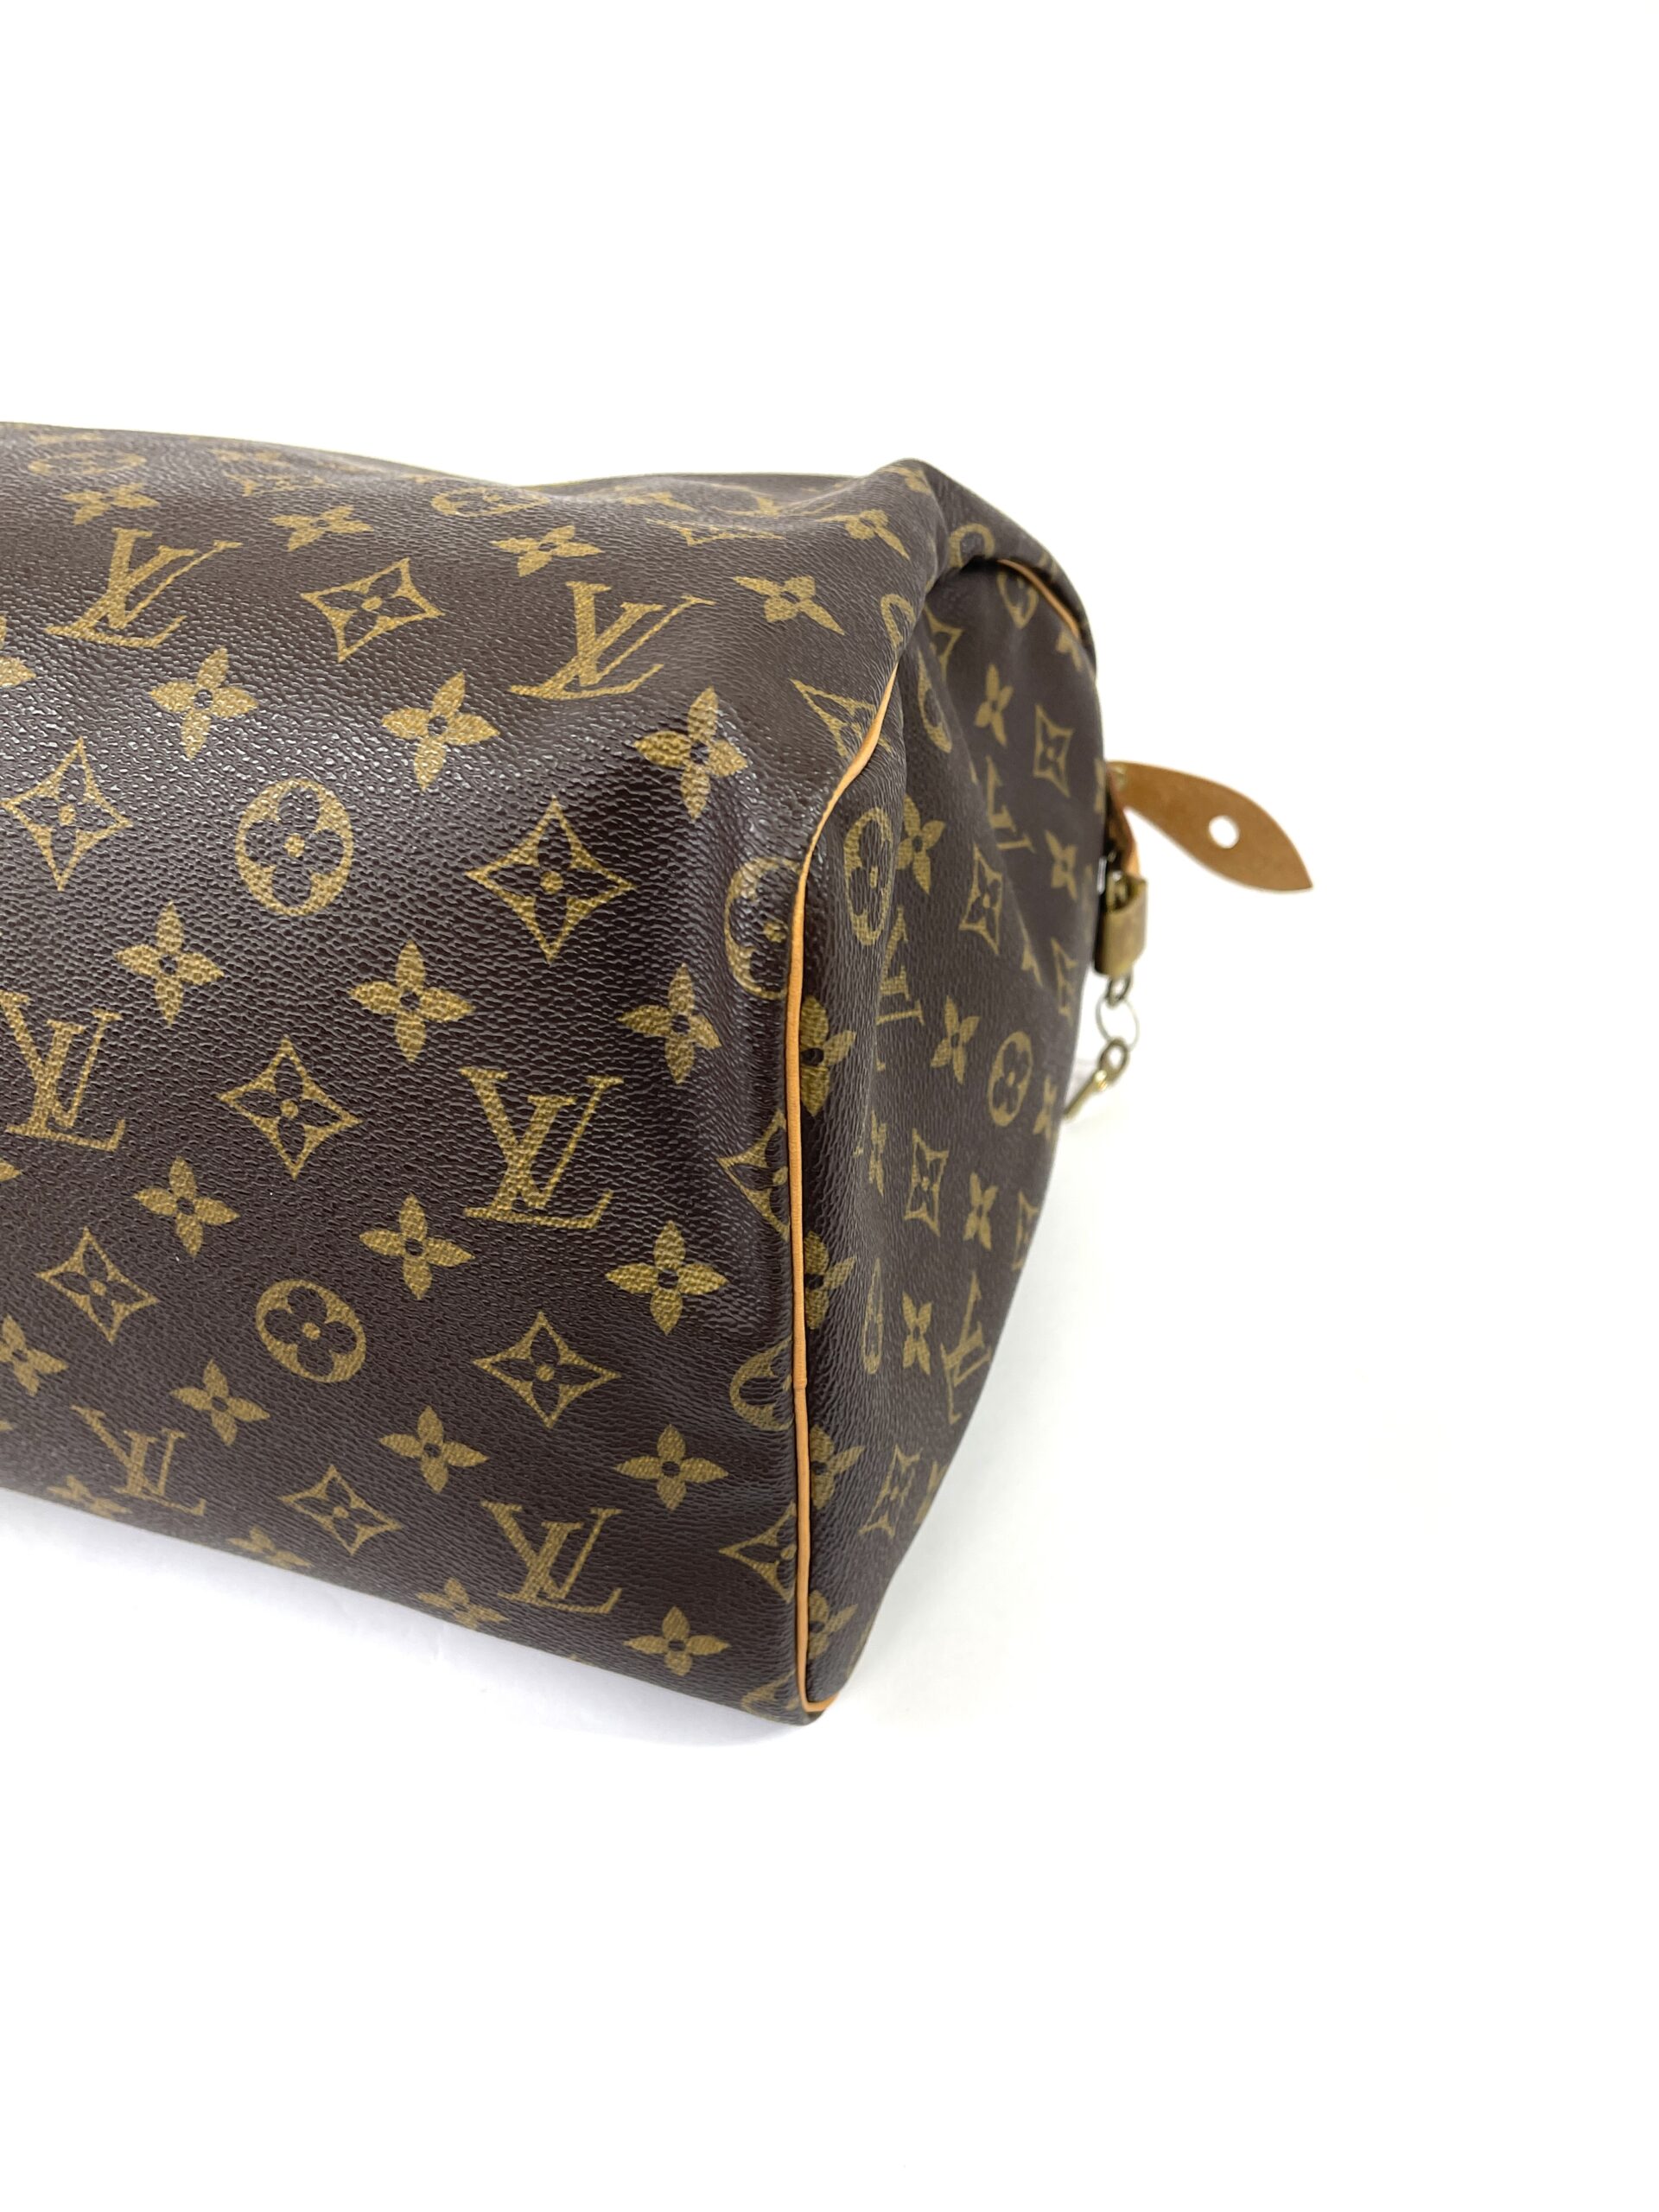 Louis Vuitton Monogram Speedy 40 Handbag, Brown, Coated Canvas